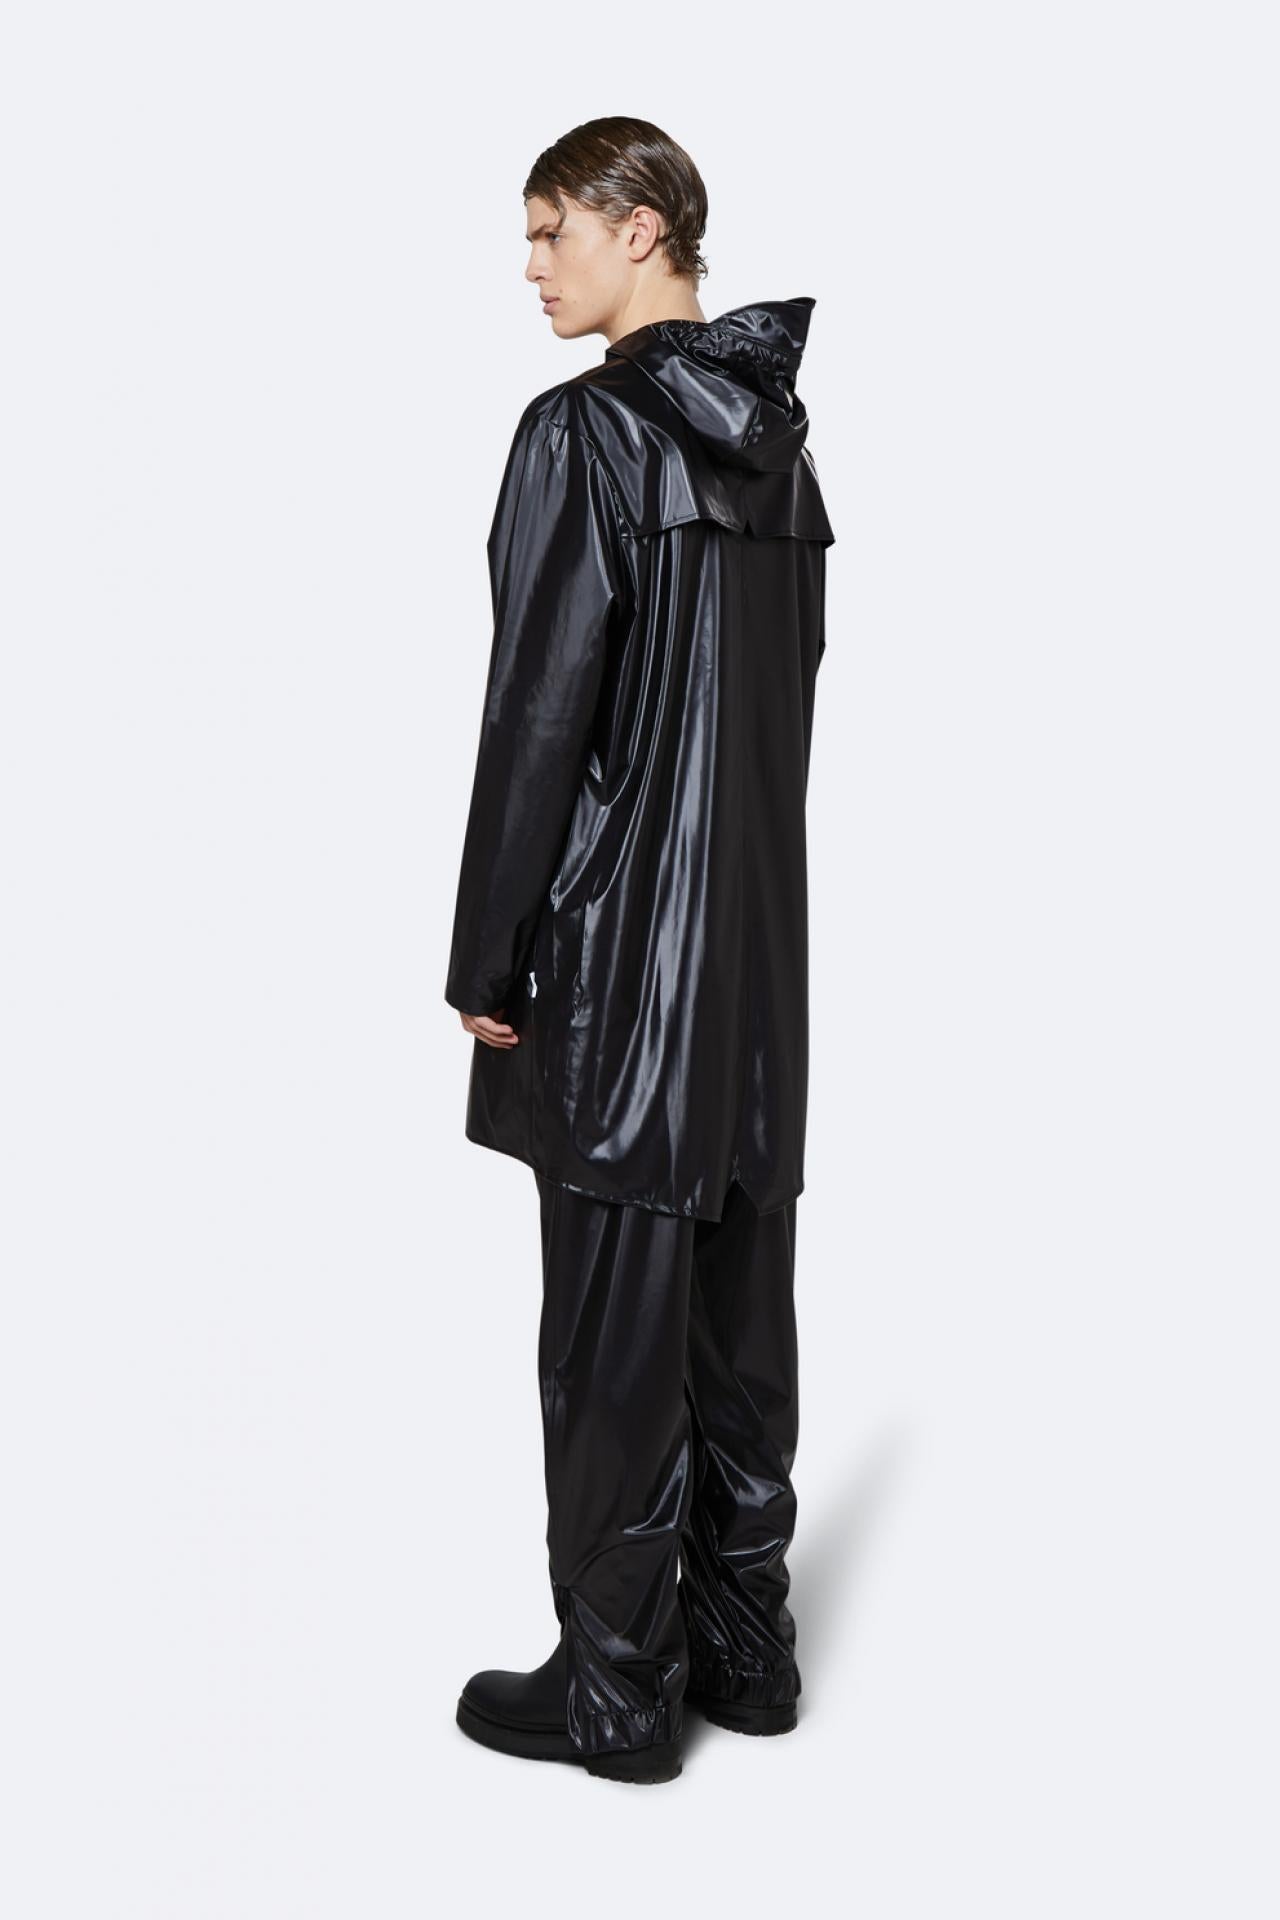 Rains Regenjacke Long Jacket 1202 Shiny Black - Größe: XS/S